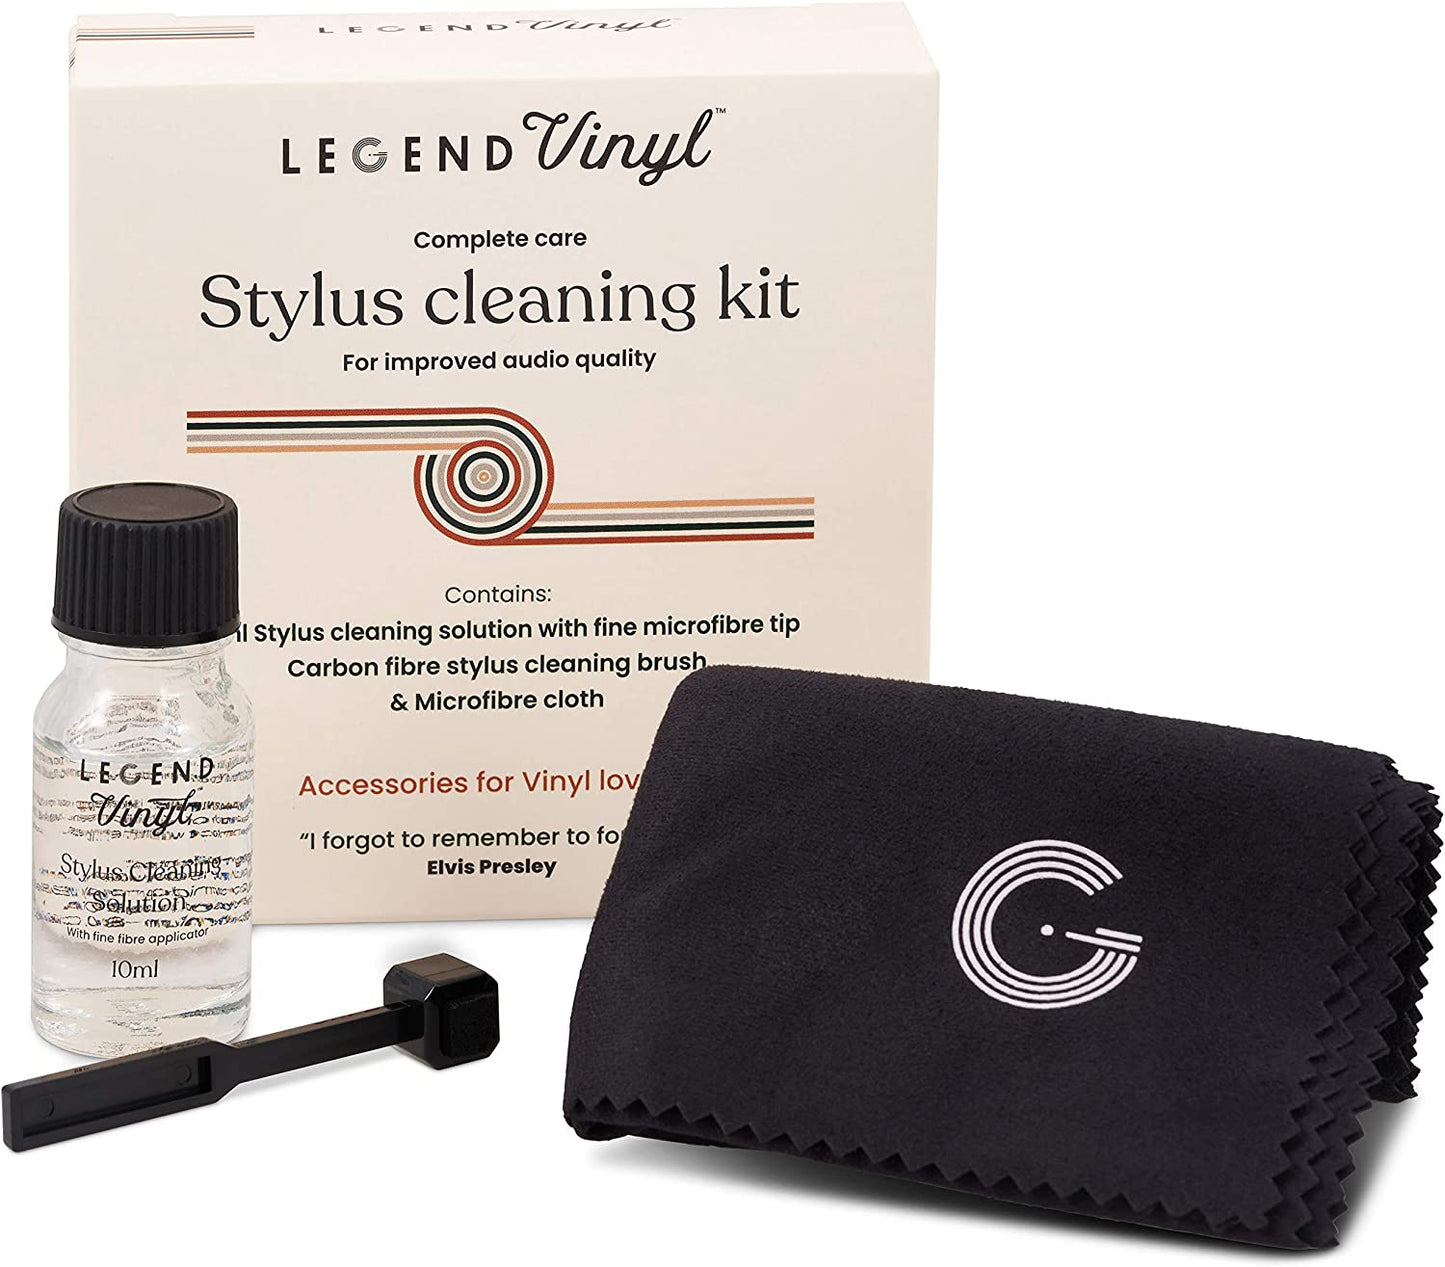 Legend Vinyl - Stylus cleaning kit